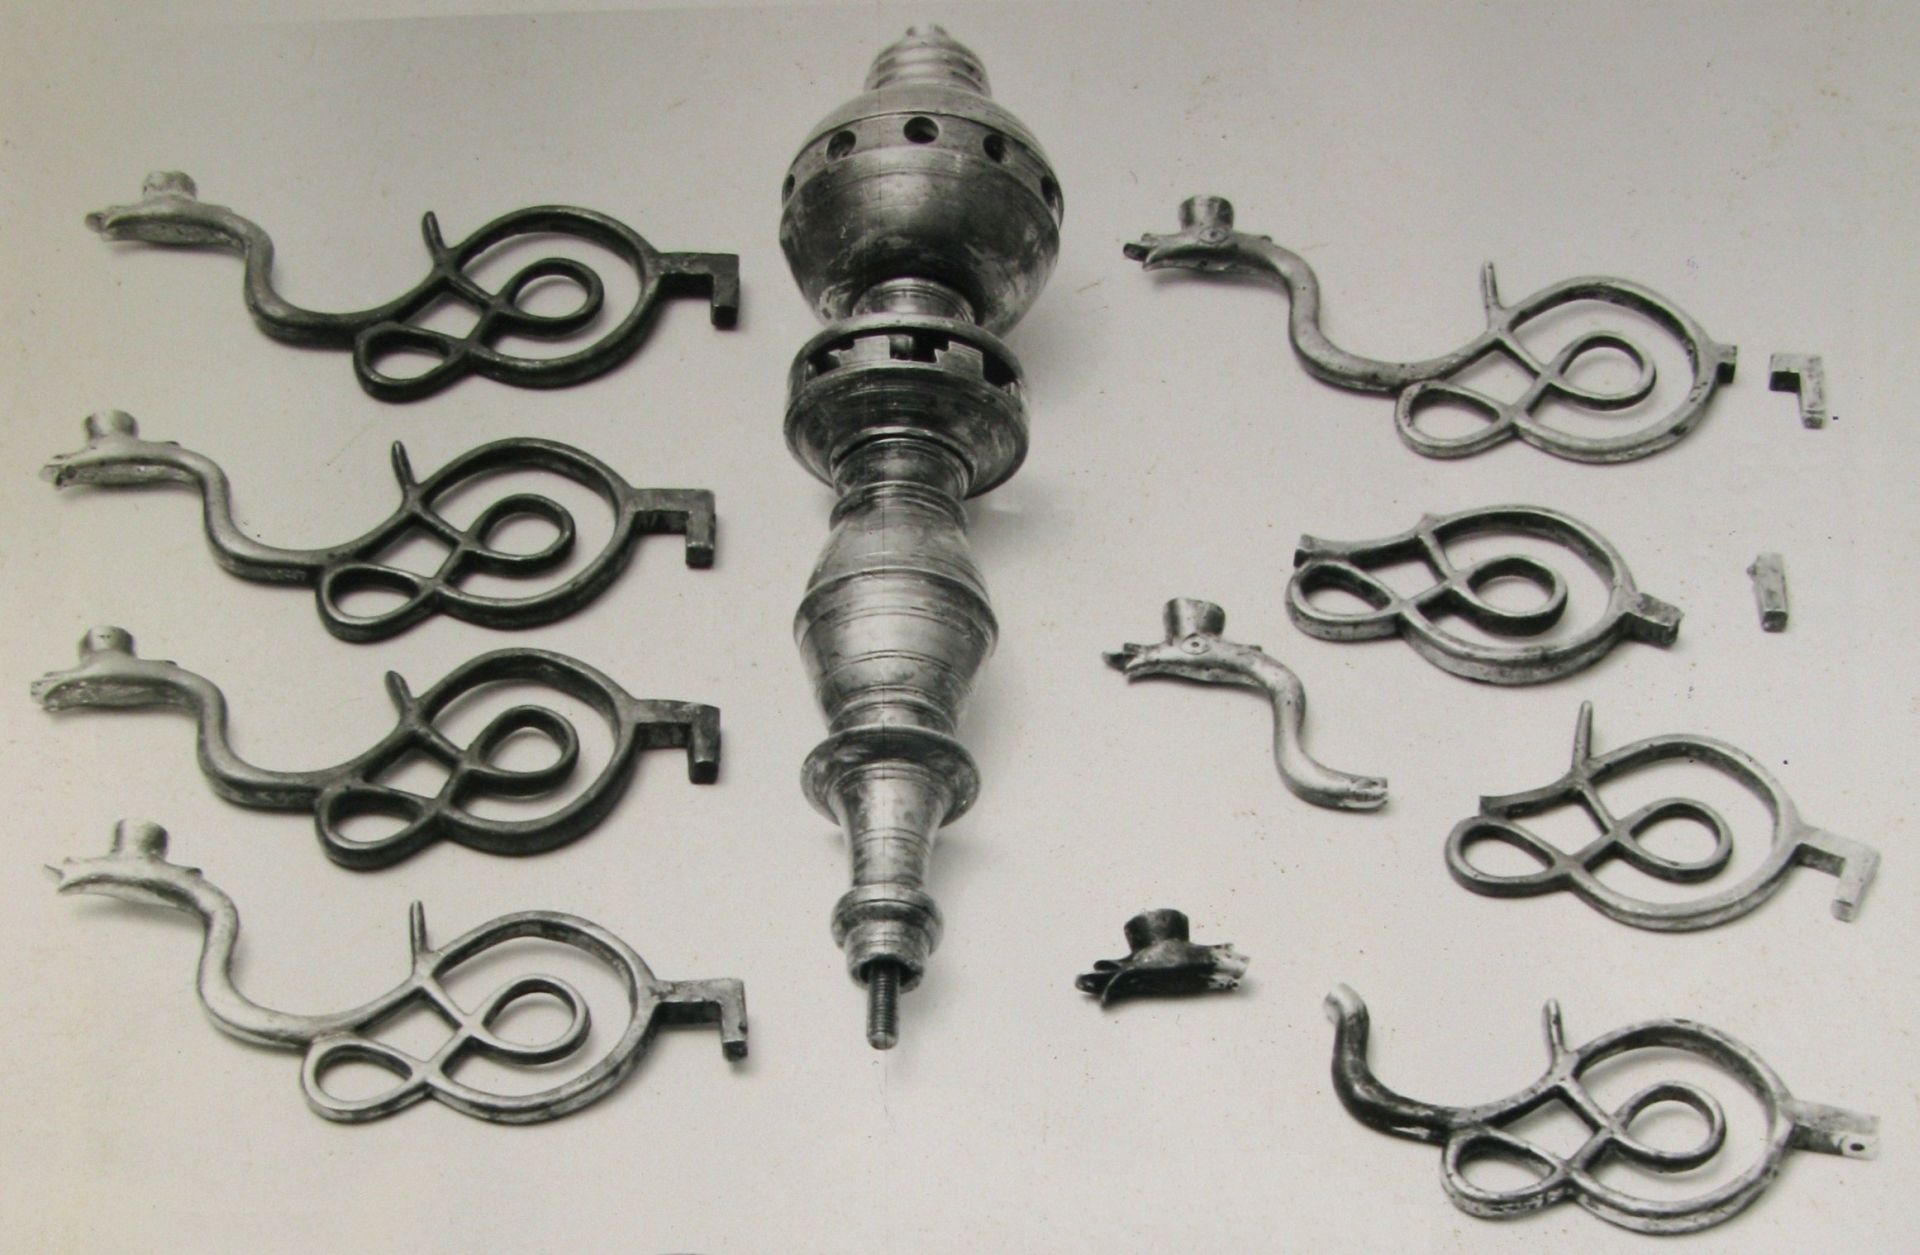 Parts of the chandelier before restoration, 1600–1699, Lithuanian Art Museum, TM-2332. Photo by Aleksandras Sidorenka, 1984, in: Lietuvos dailės muziejaus Prano Gudyno restauravimo centras